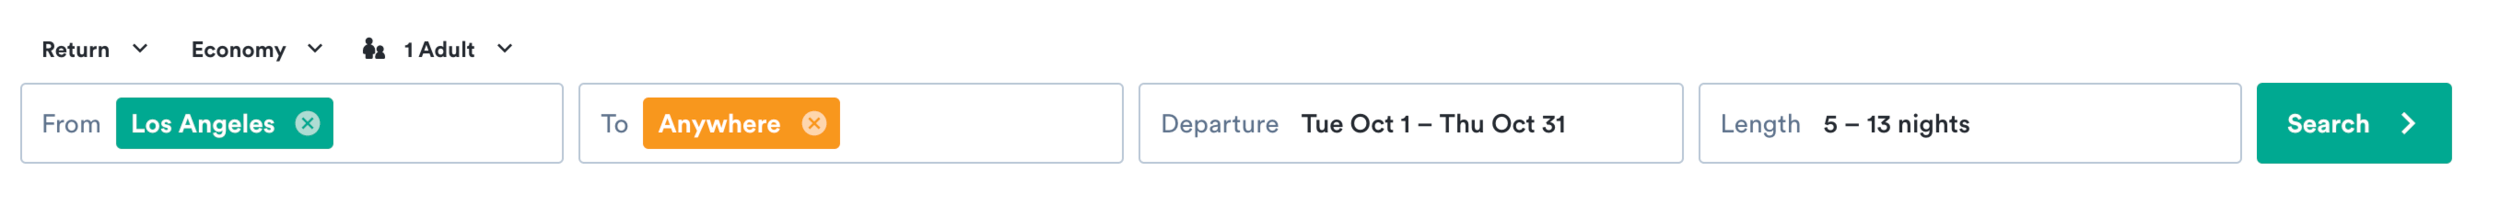 kiwi flight booking flexible dates